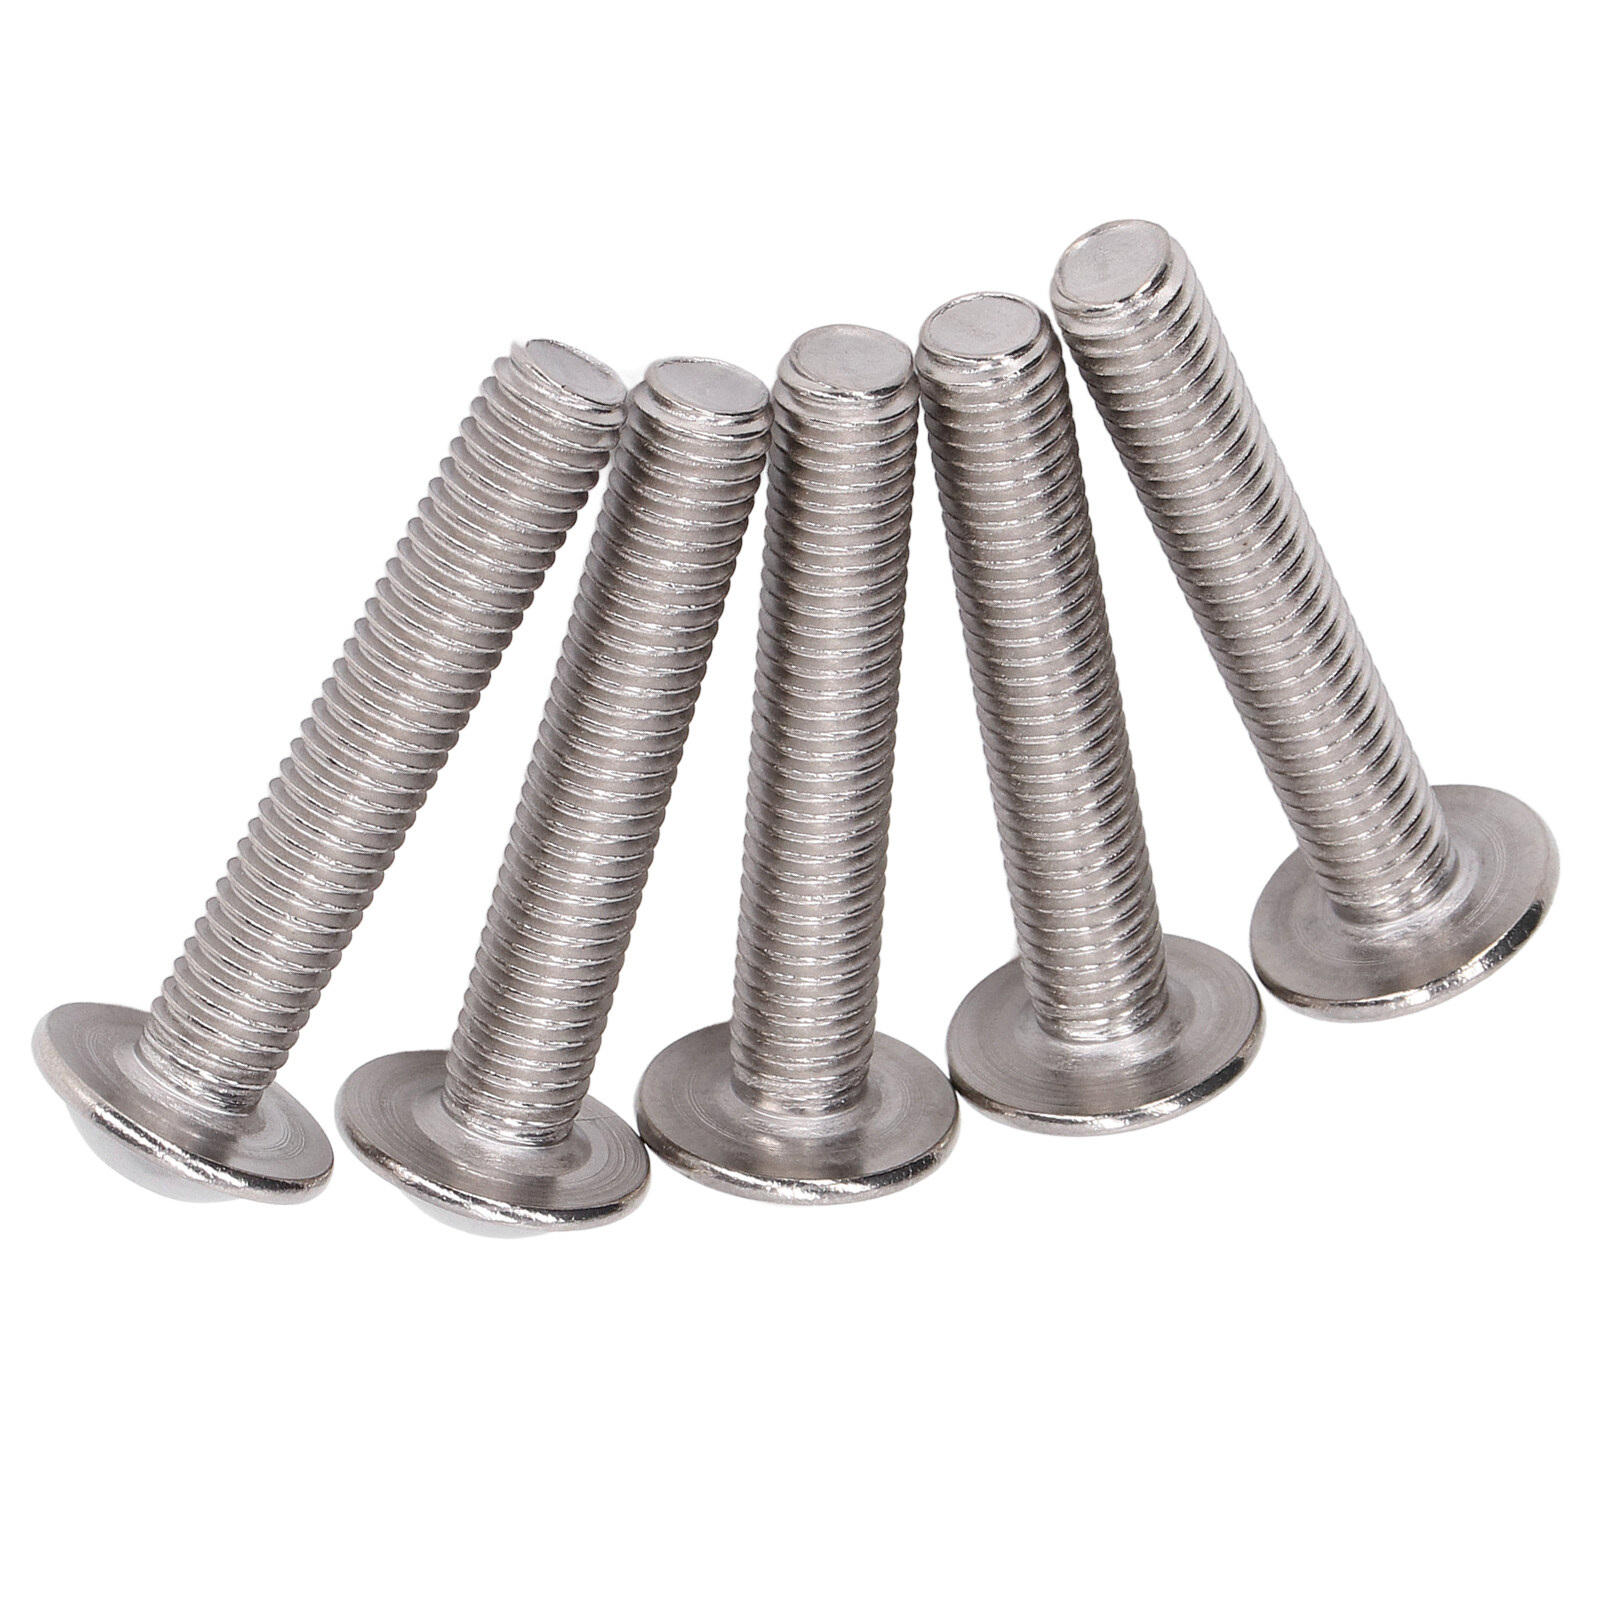 Stainless Steel Bolts ราคาถูก ซื้อออนไลน์ที่ - ต.ค. 2022 | Lazada.co.th